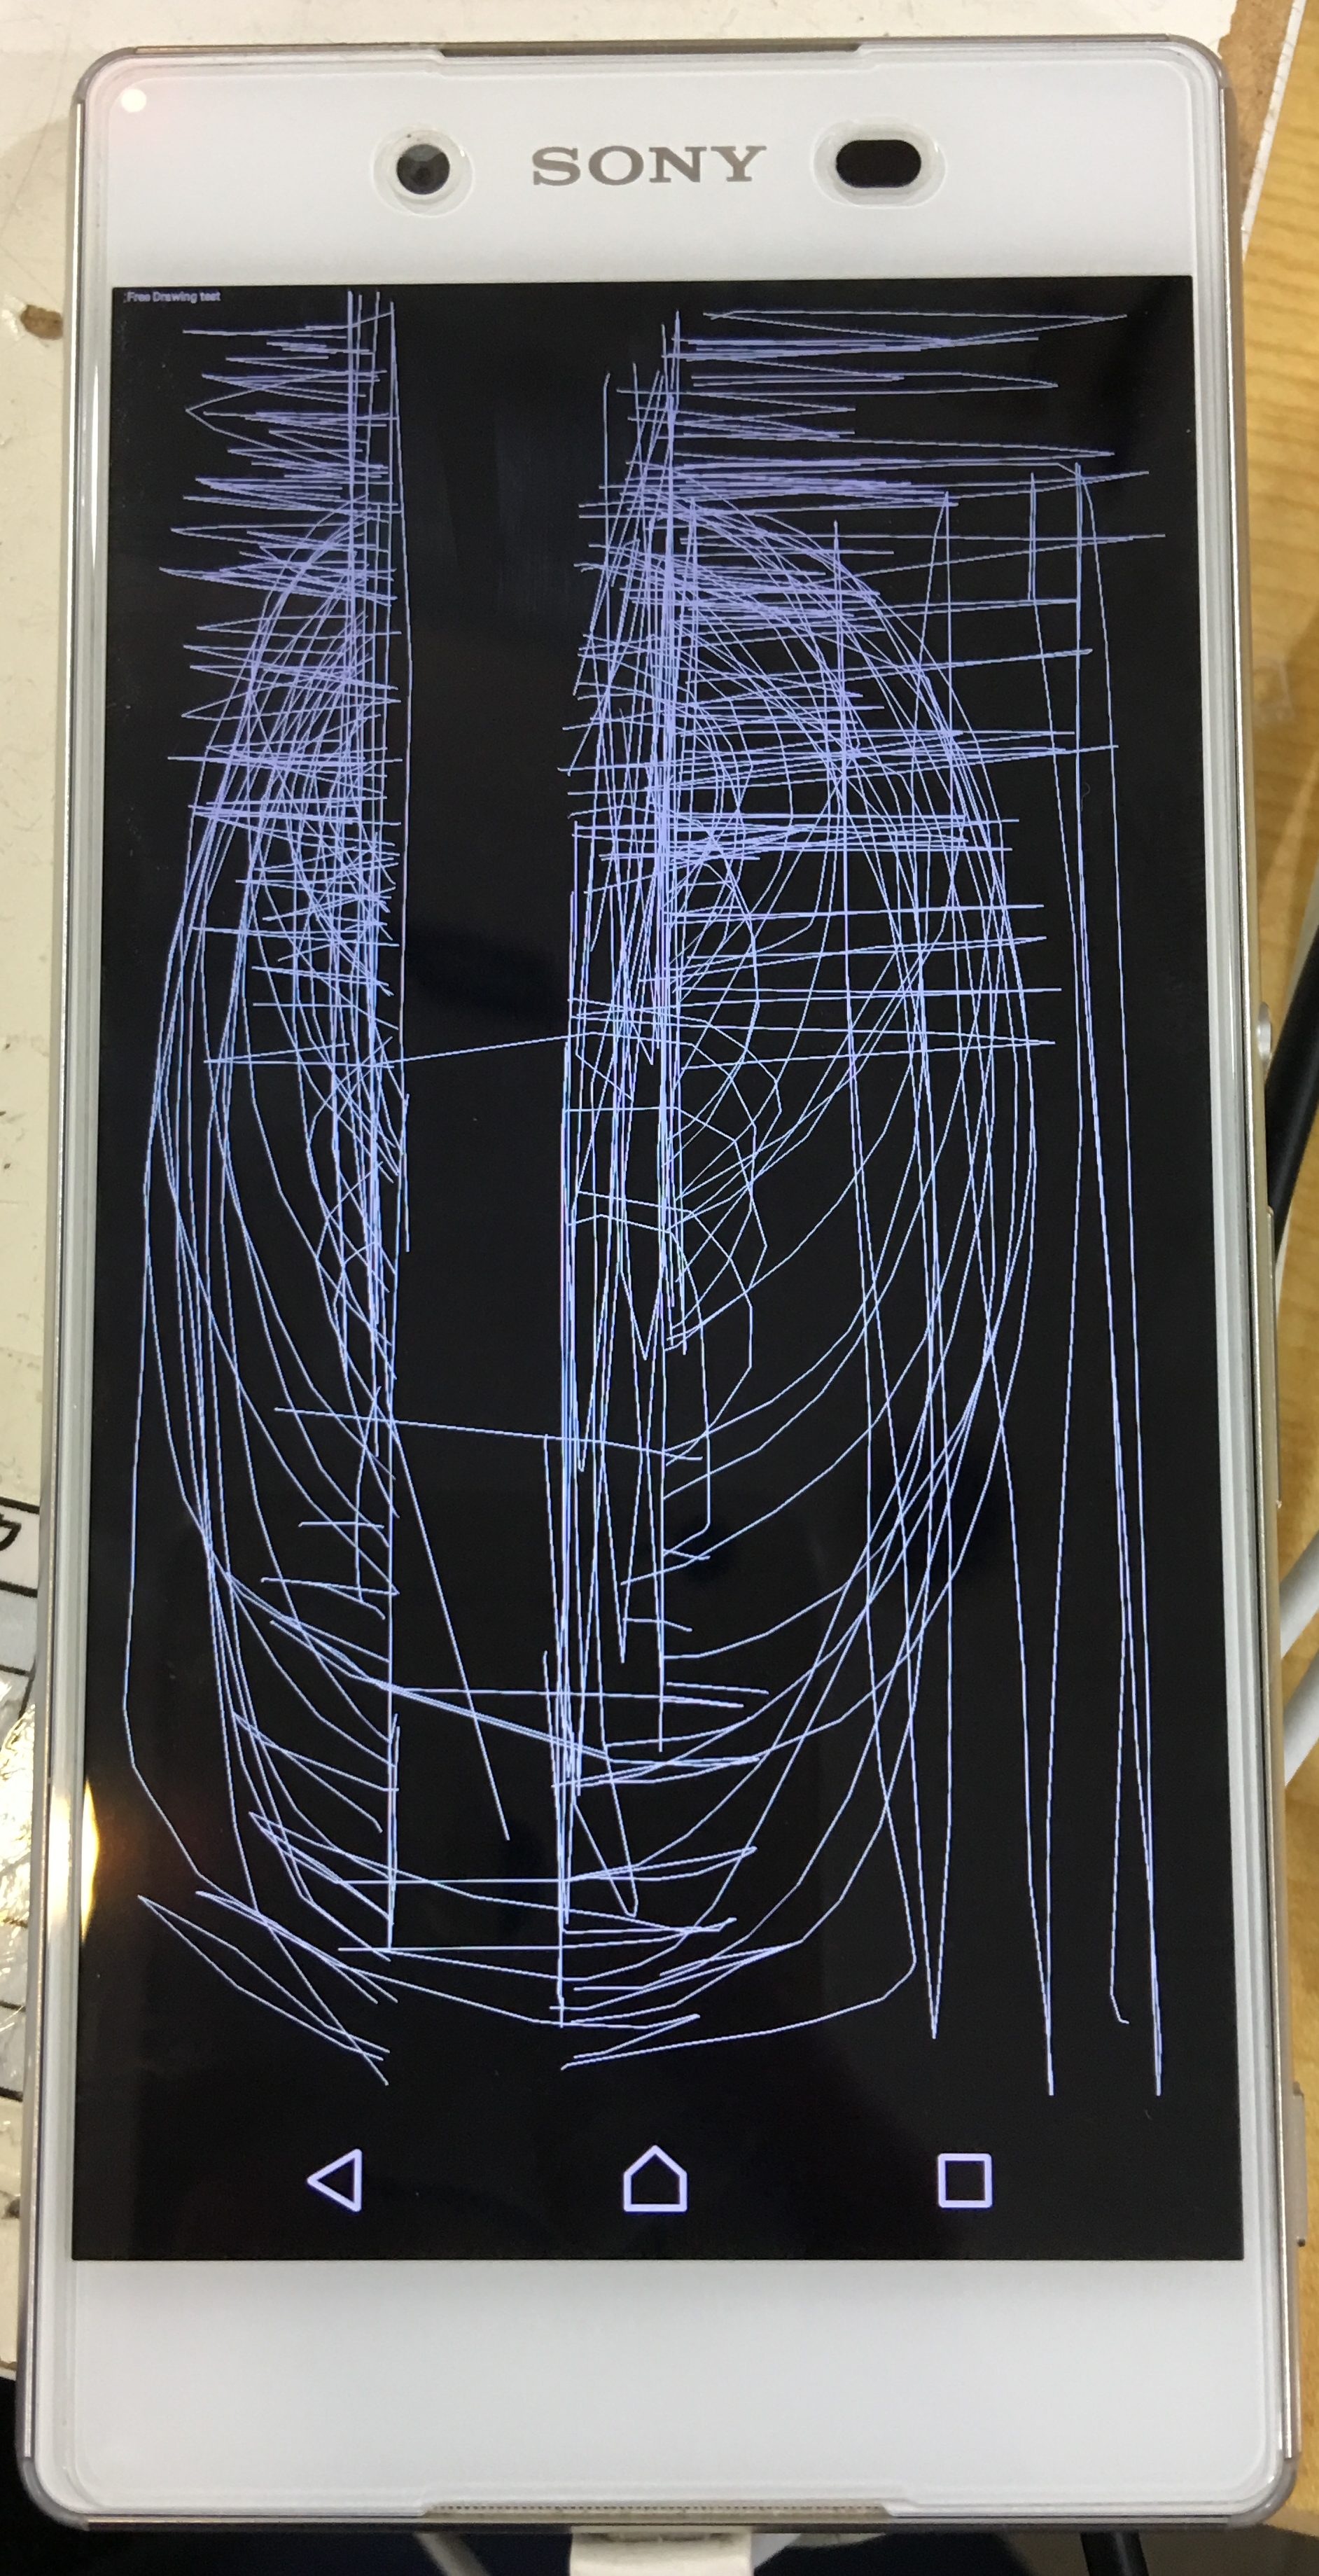 Xperiaに稀に起こる タッチ切れ とは Xperia Galaxy Zenfone Huawei Nexus修理のアンドロイドホスピタル